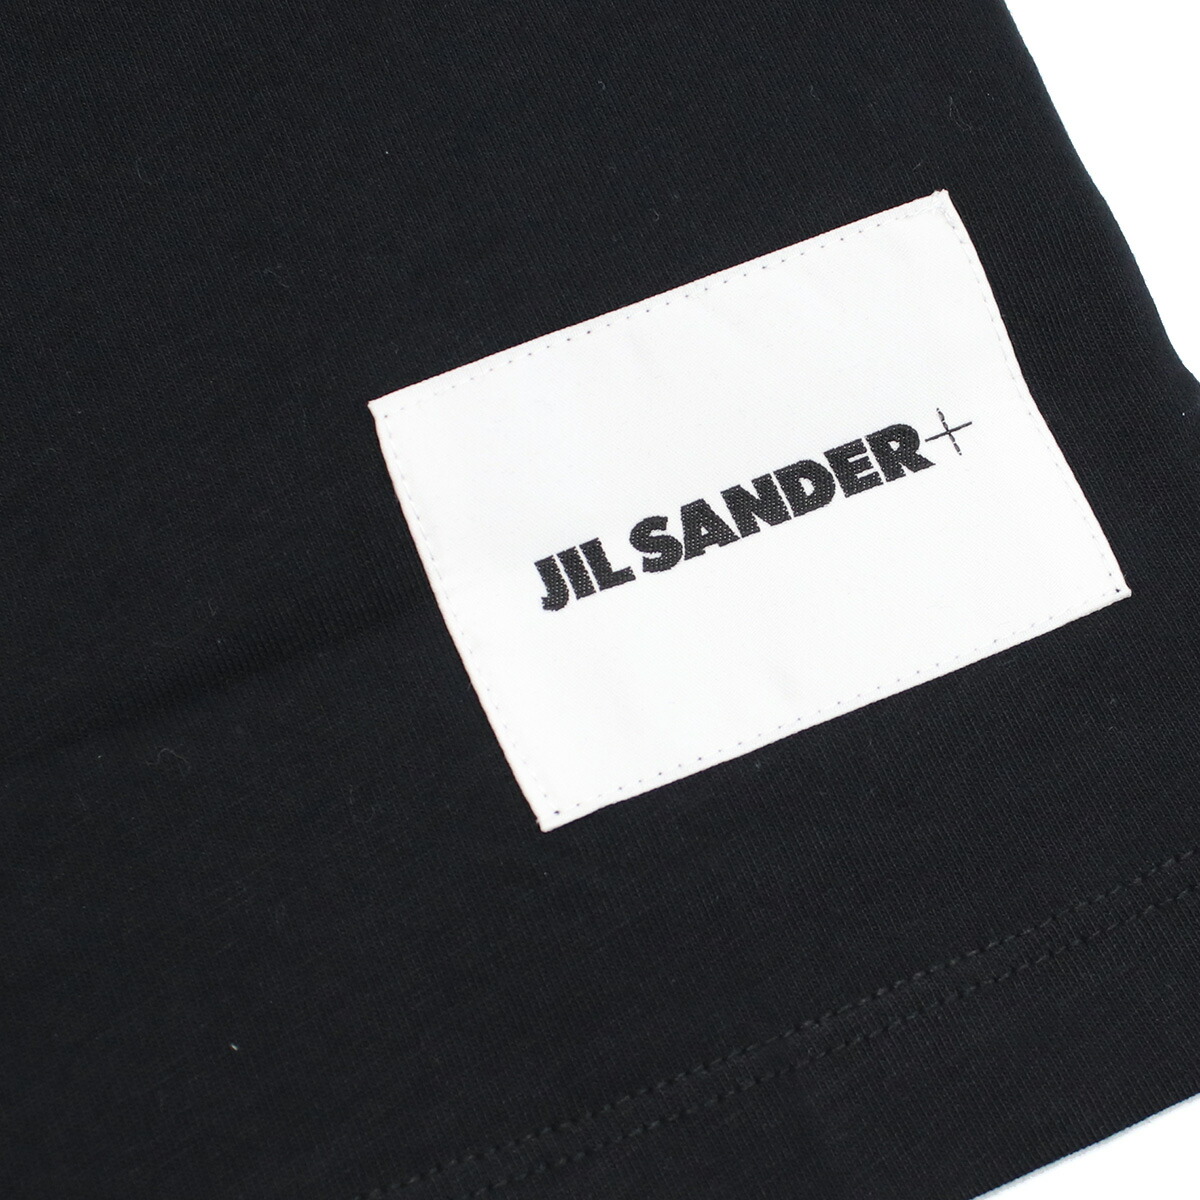 Armerie Boutique ジル サンダー JIL SANDER メンズ－Ｔシャツ 3枚セット ブランド シンプル J47GC0001  J45048 001 T-SHIRT CN SS PACK Tシャツ ブラック ts-01